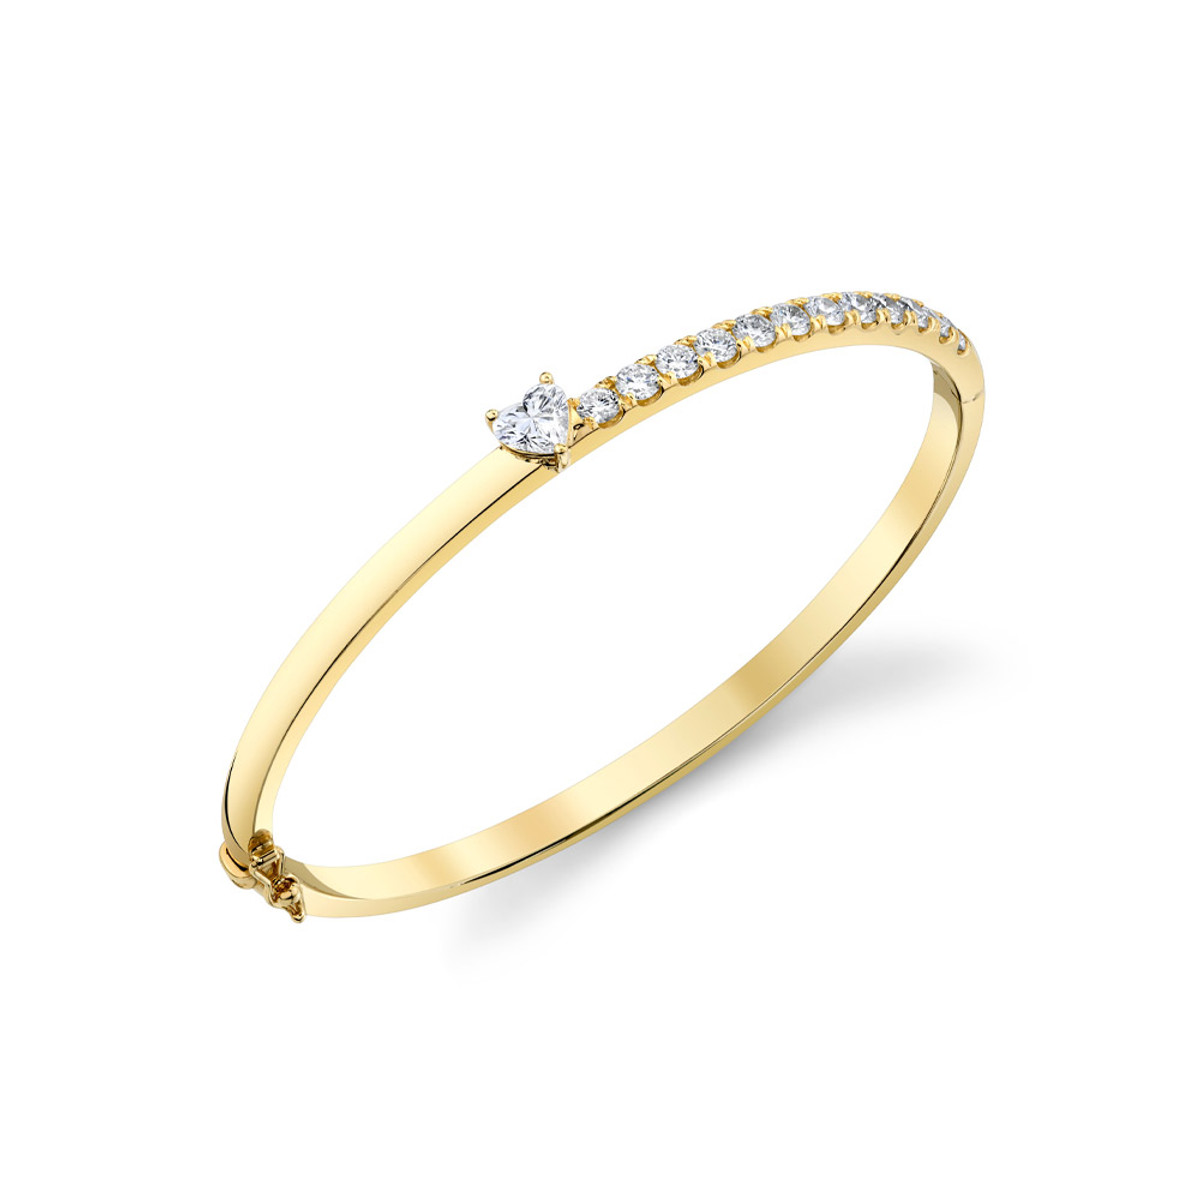 Hyde Park Collection 18K Yellow Gold Heart Diamond Bangle Bracelet-55794 Product Image